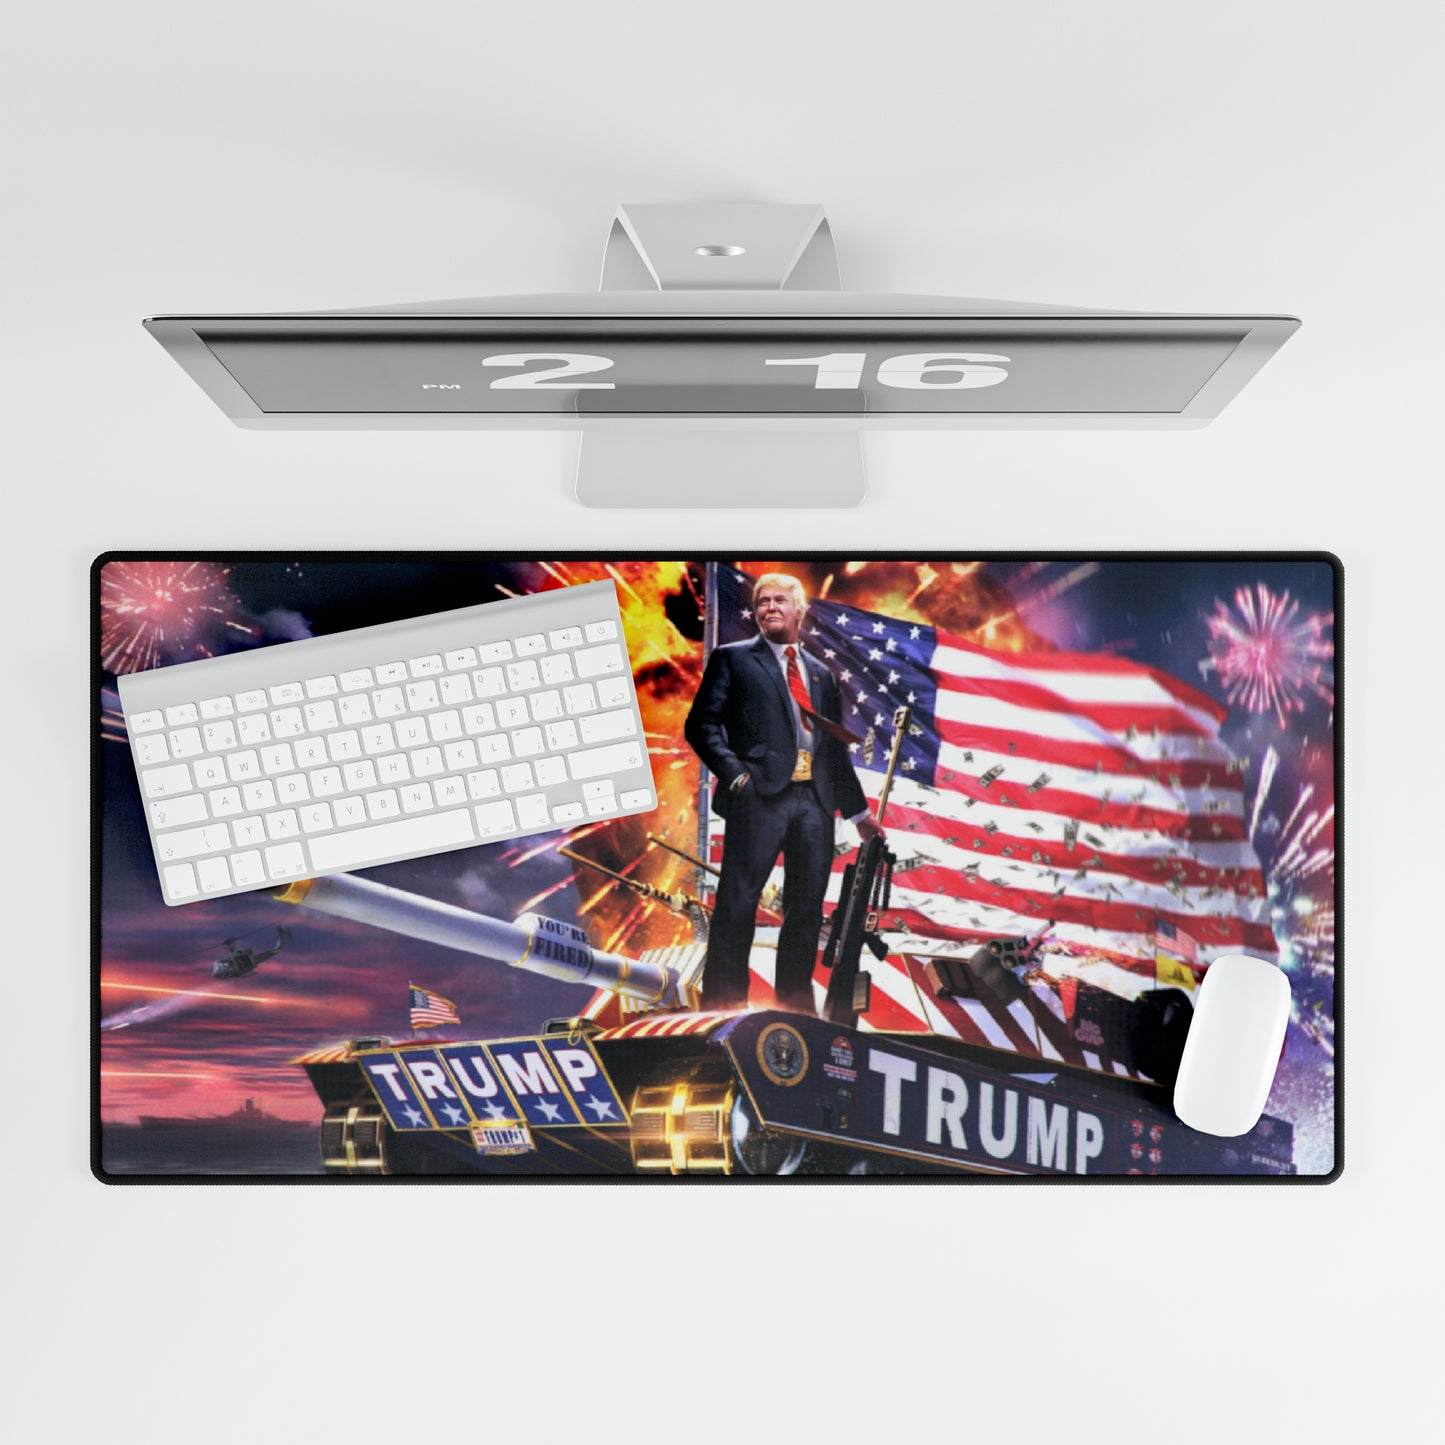 Donald Trump The Warrior Tank High Definition MAGA American Desk Mats